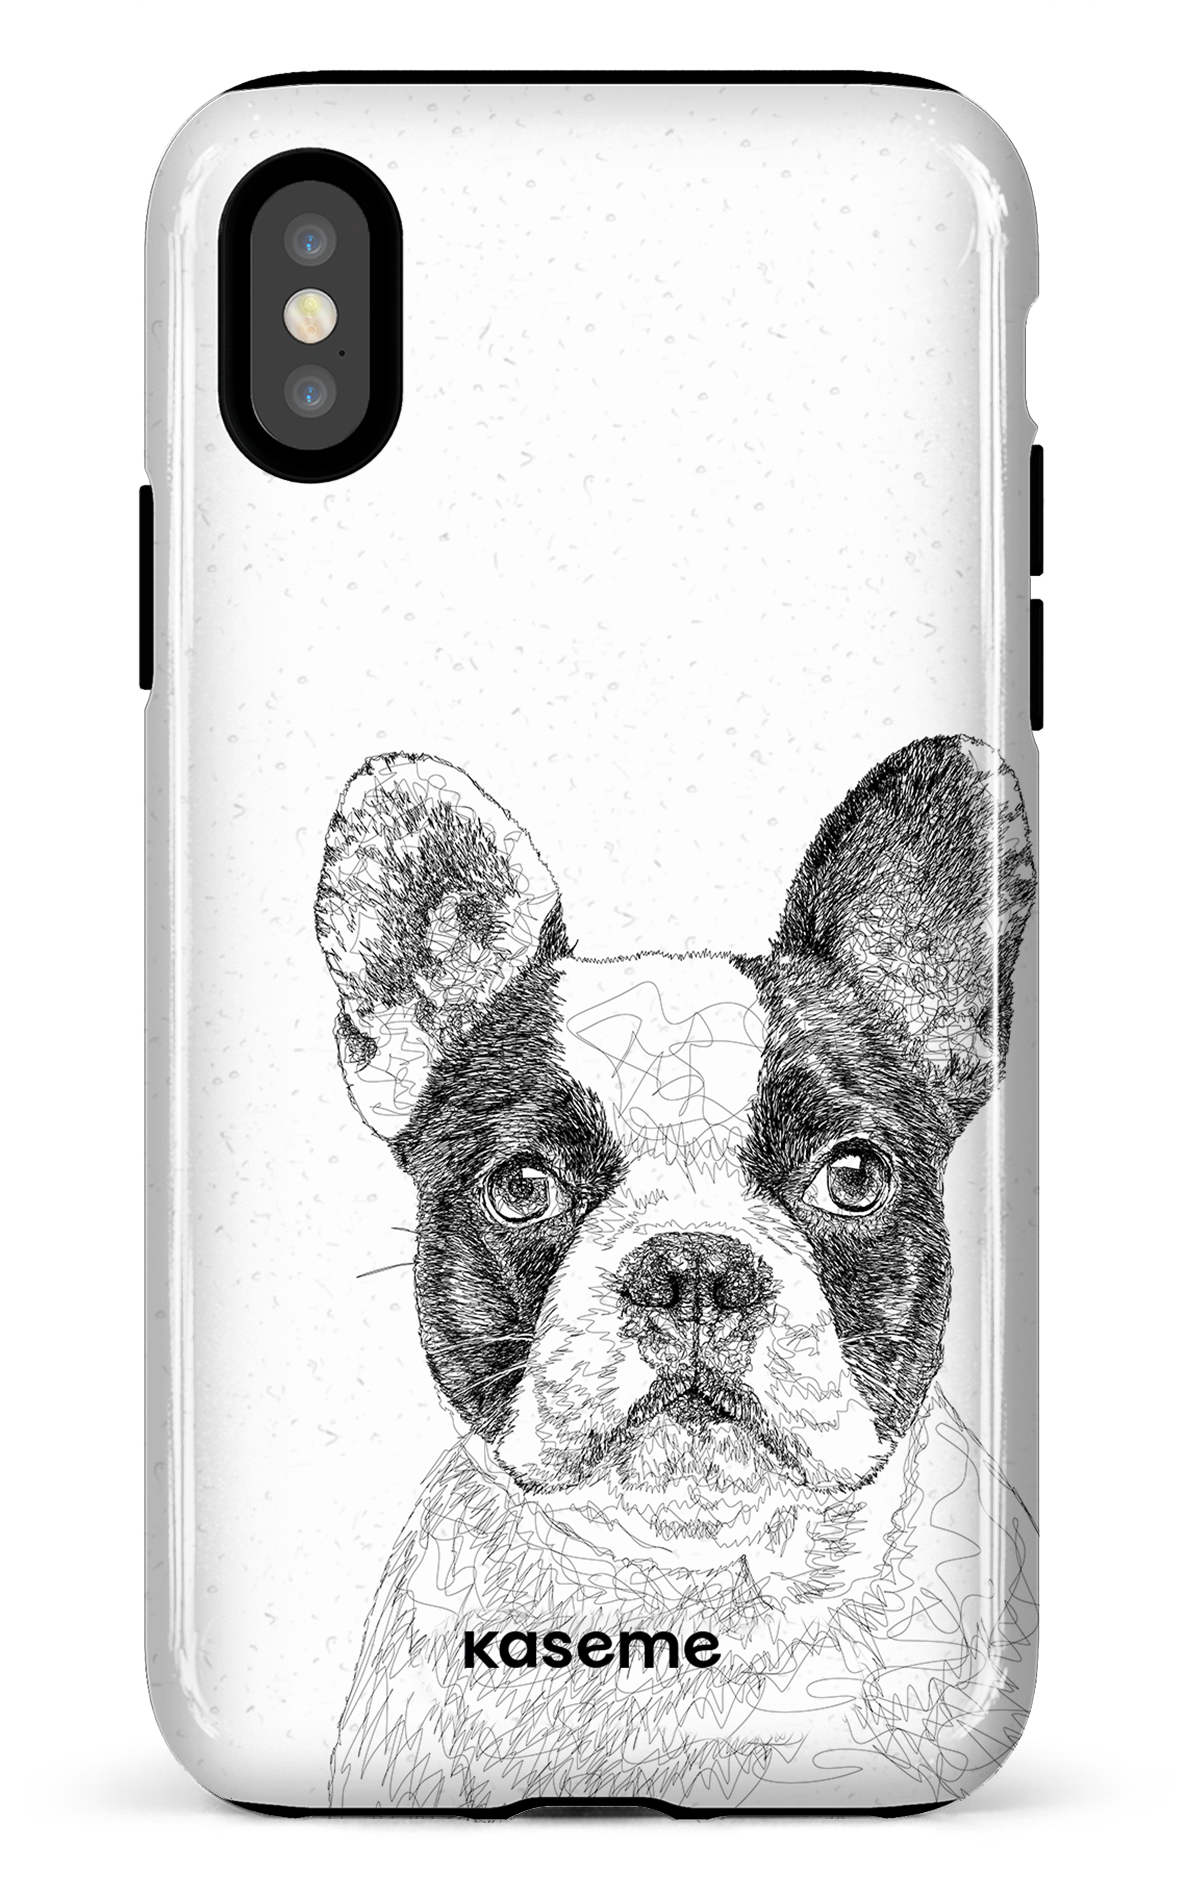 French Bulldog - iPhone X/Xs